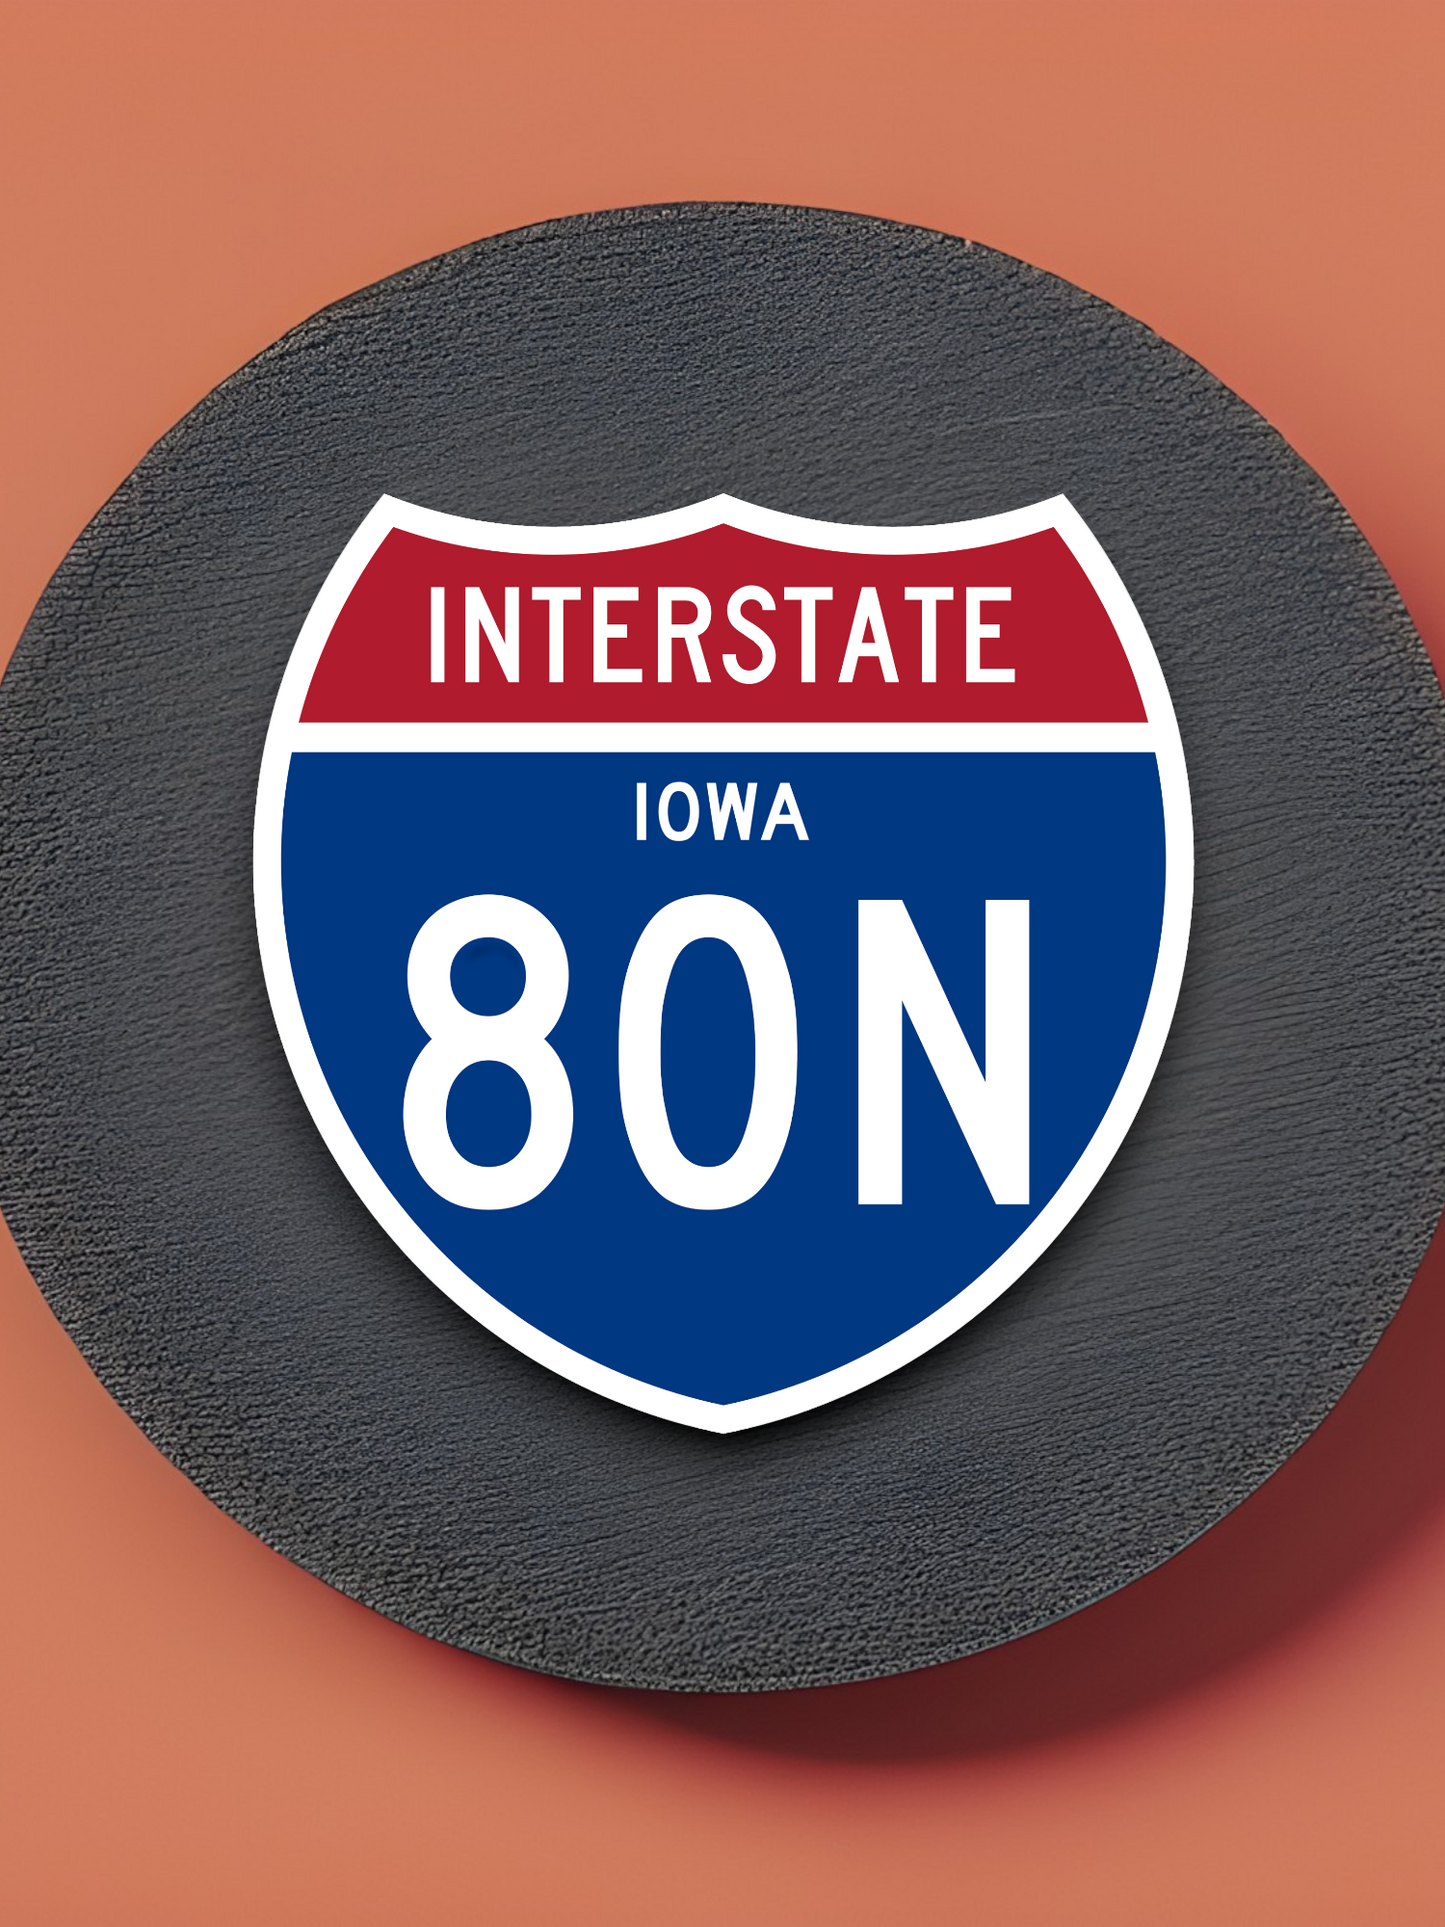 Interstate I-80N Iowa - Road Sign Sticker